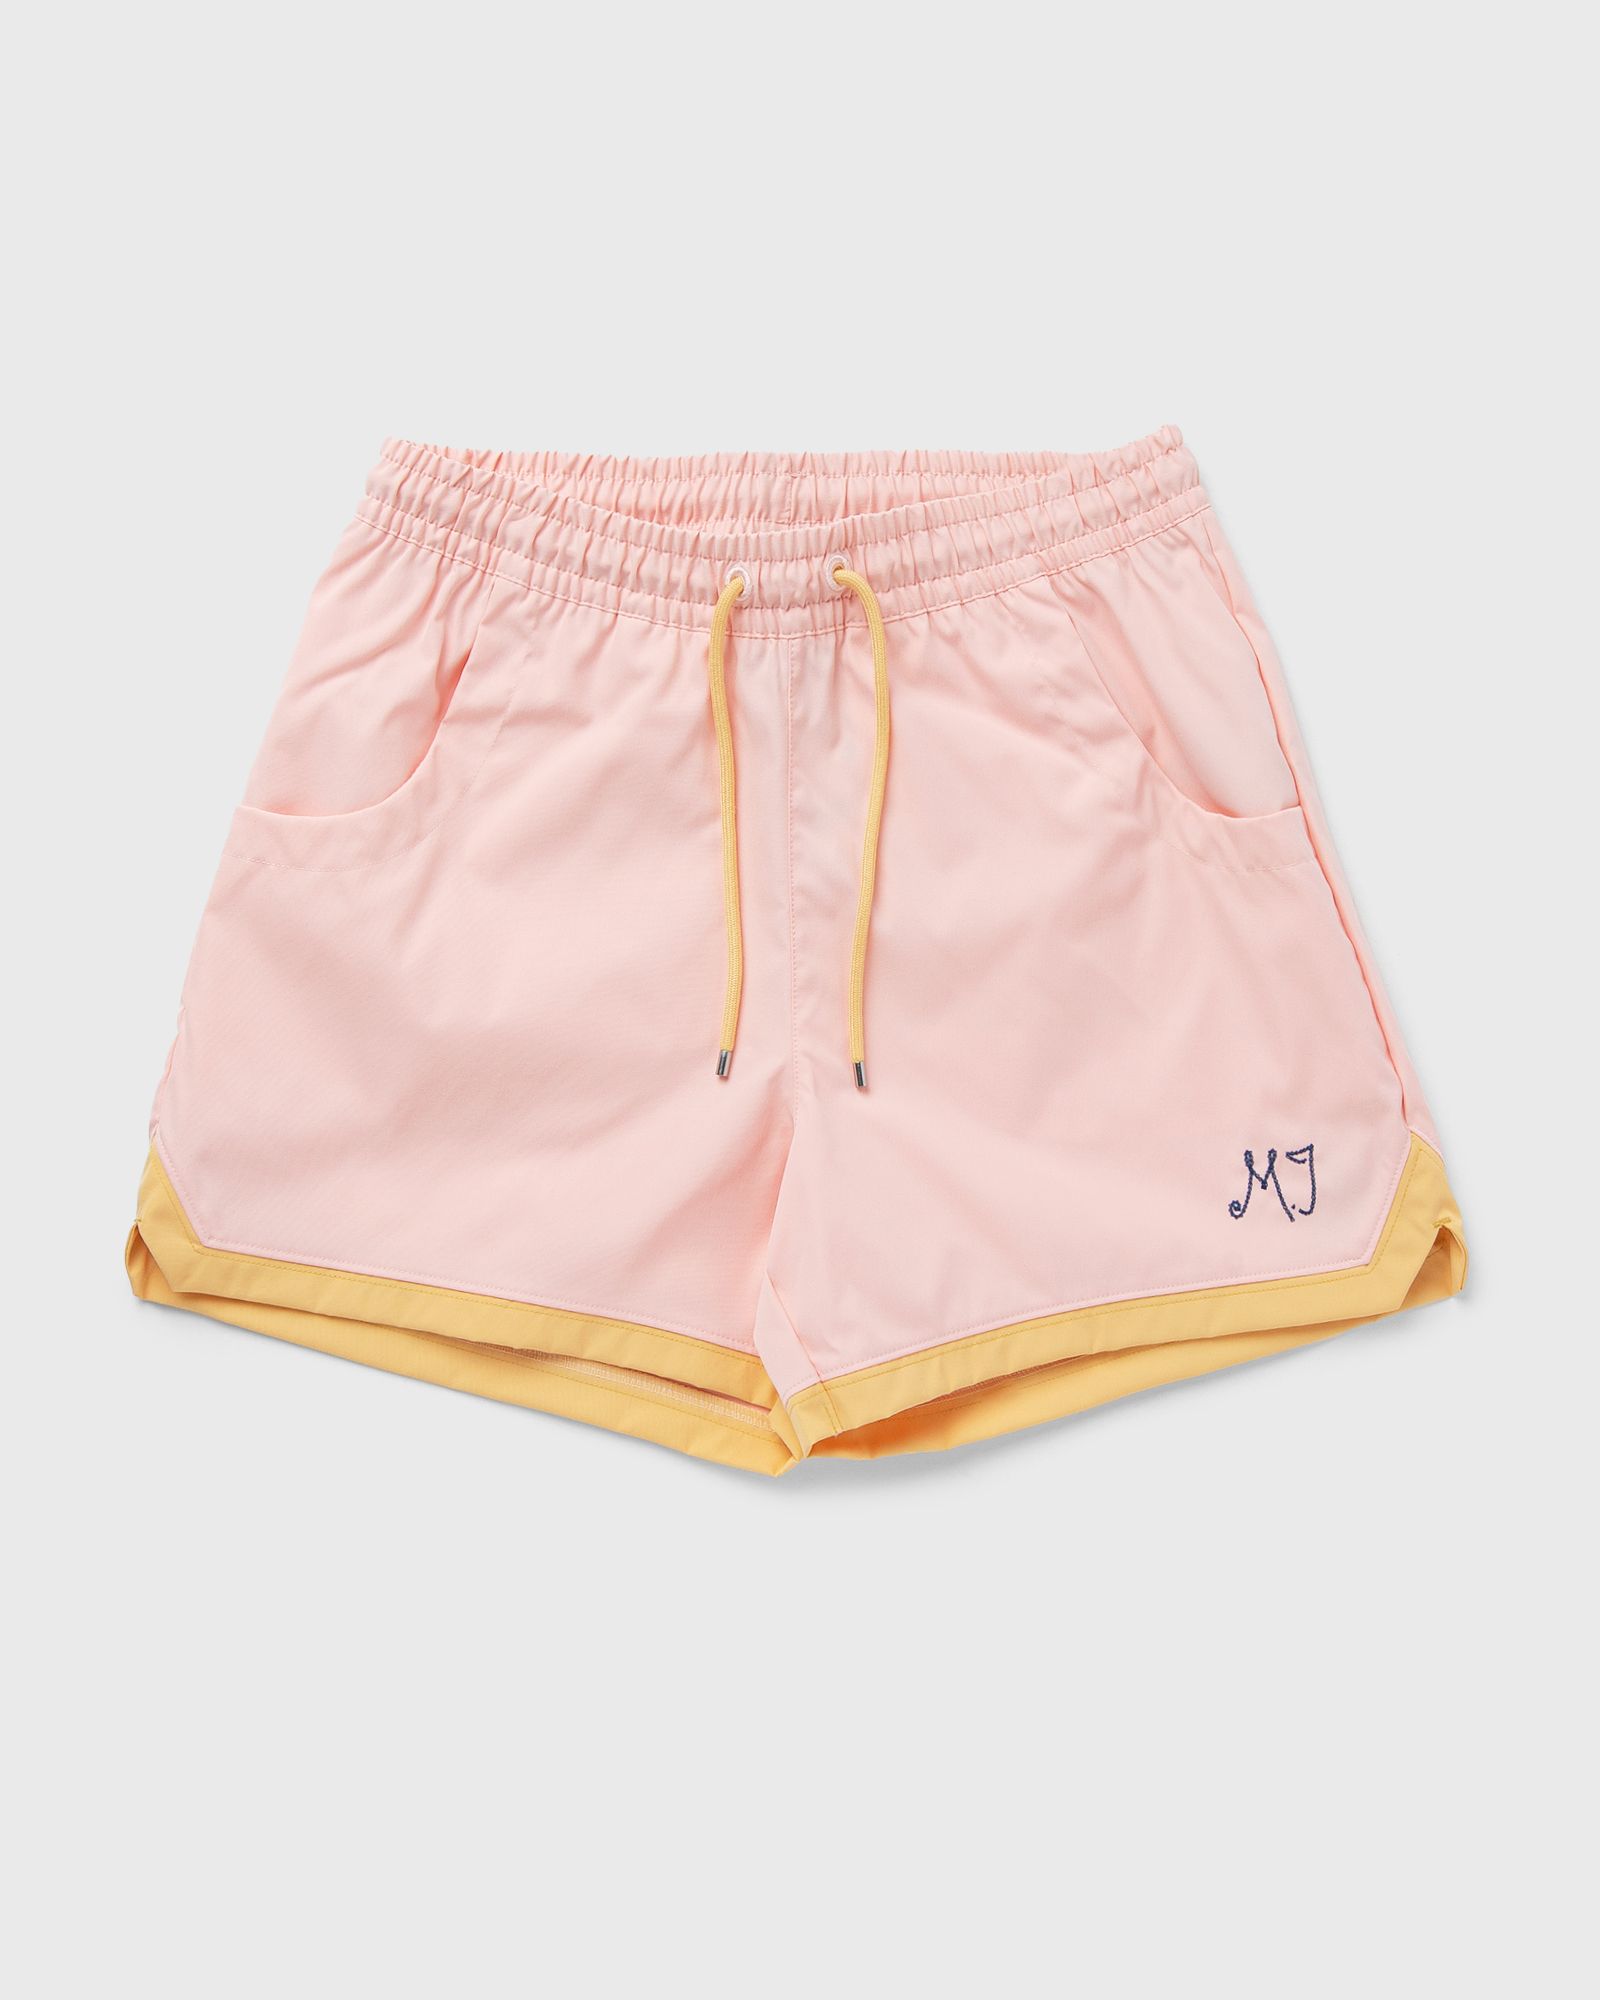 Jordan - woven shorts women sport & team shorts pink in größe:l